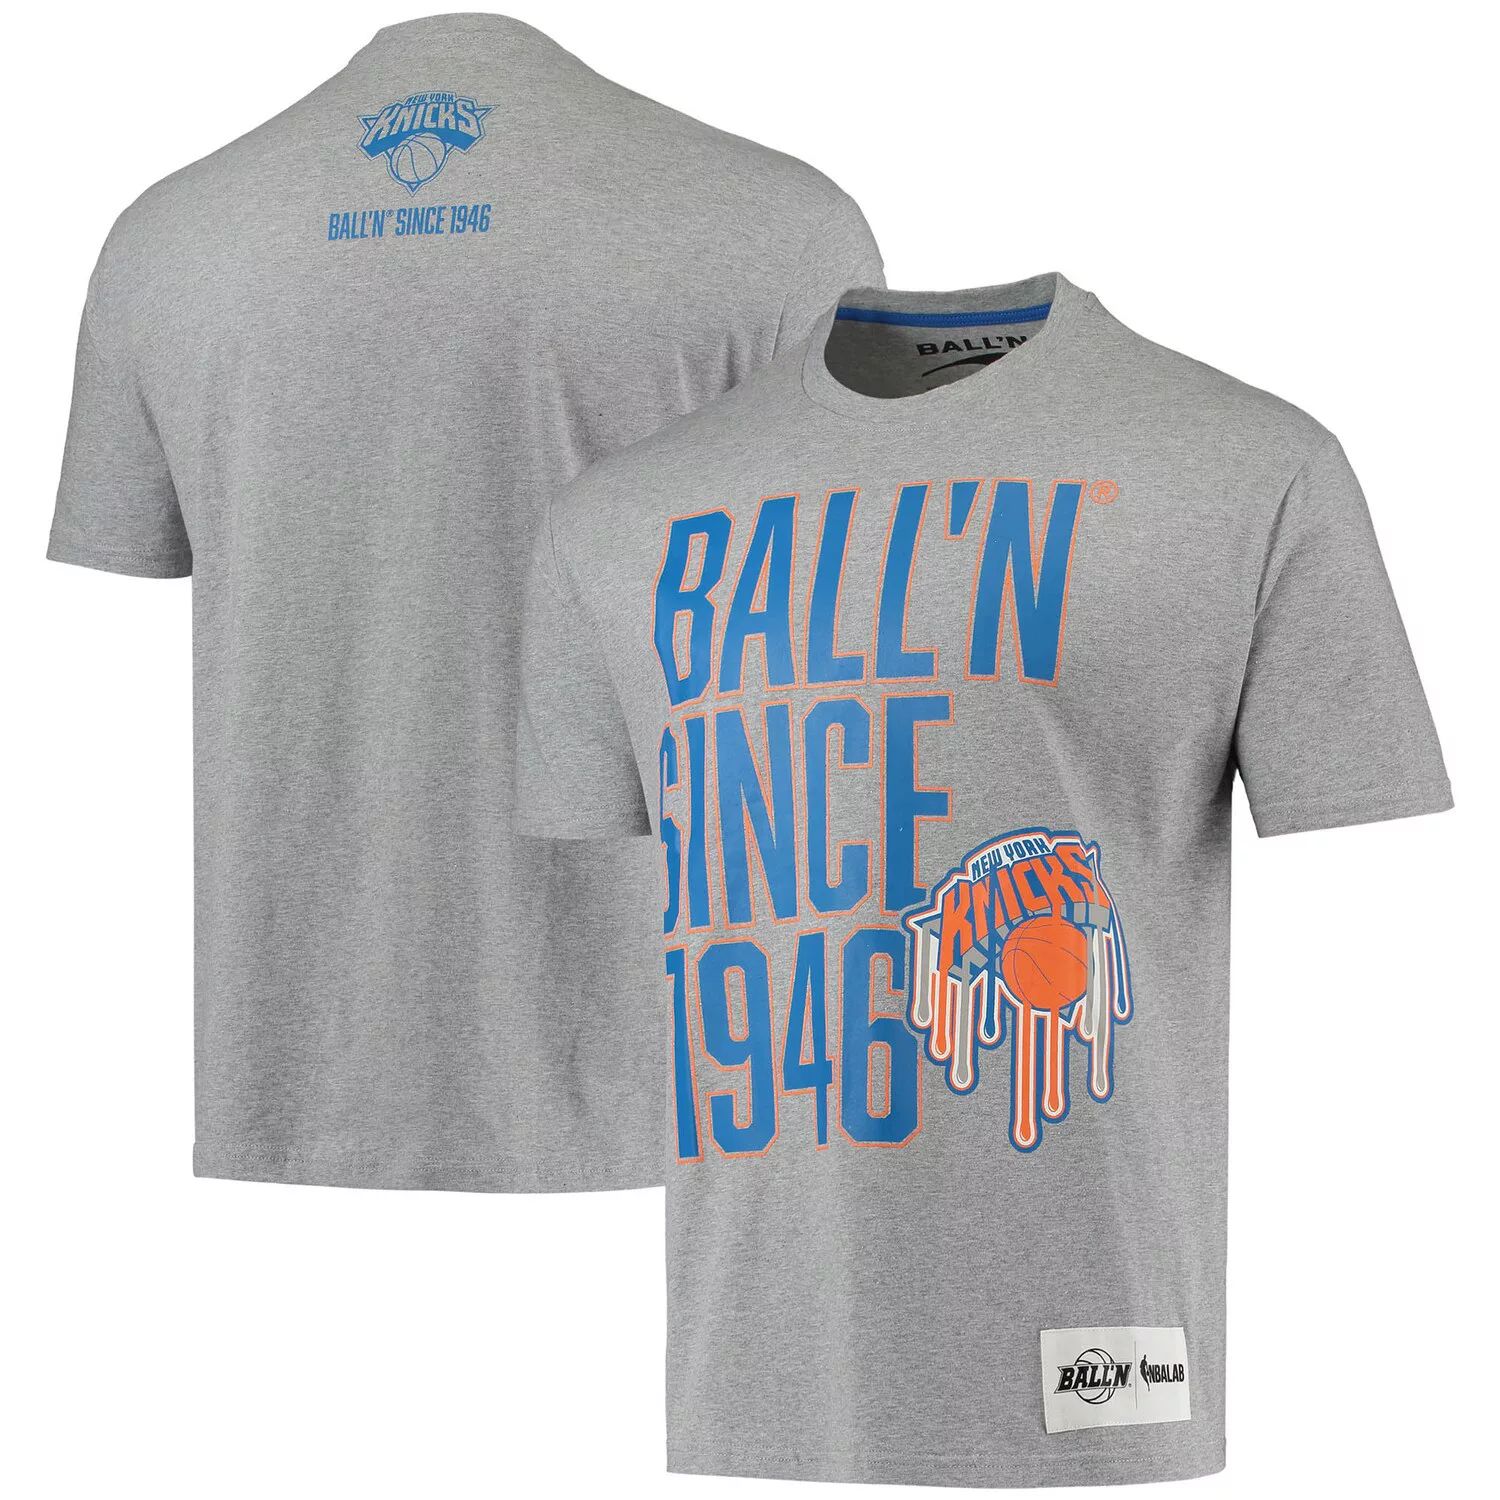 Ballin футболка. Майка balls. SOLARBALLS футболка. USA since 1989.